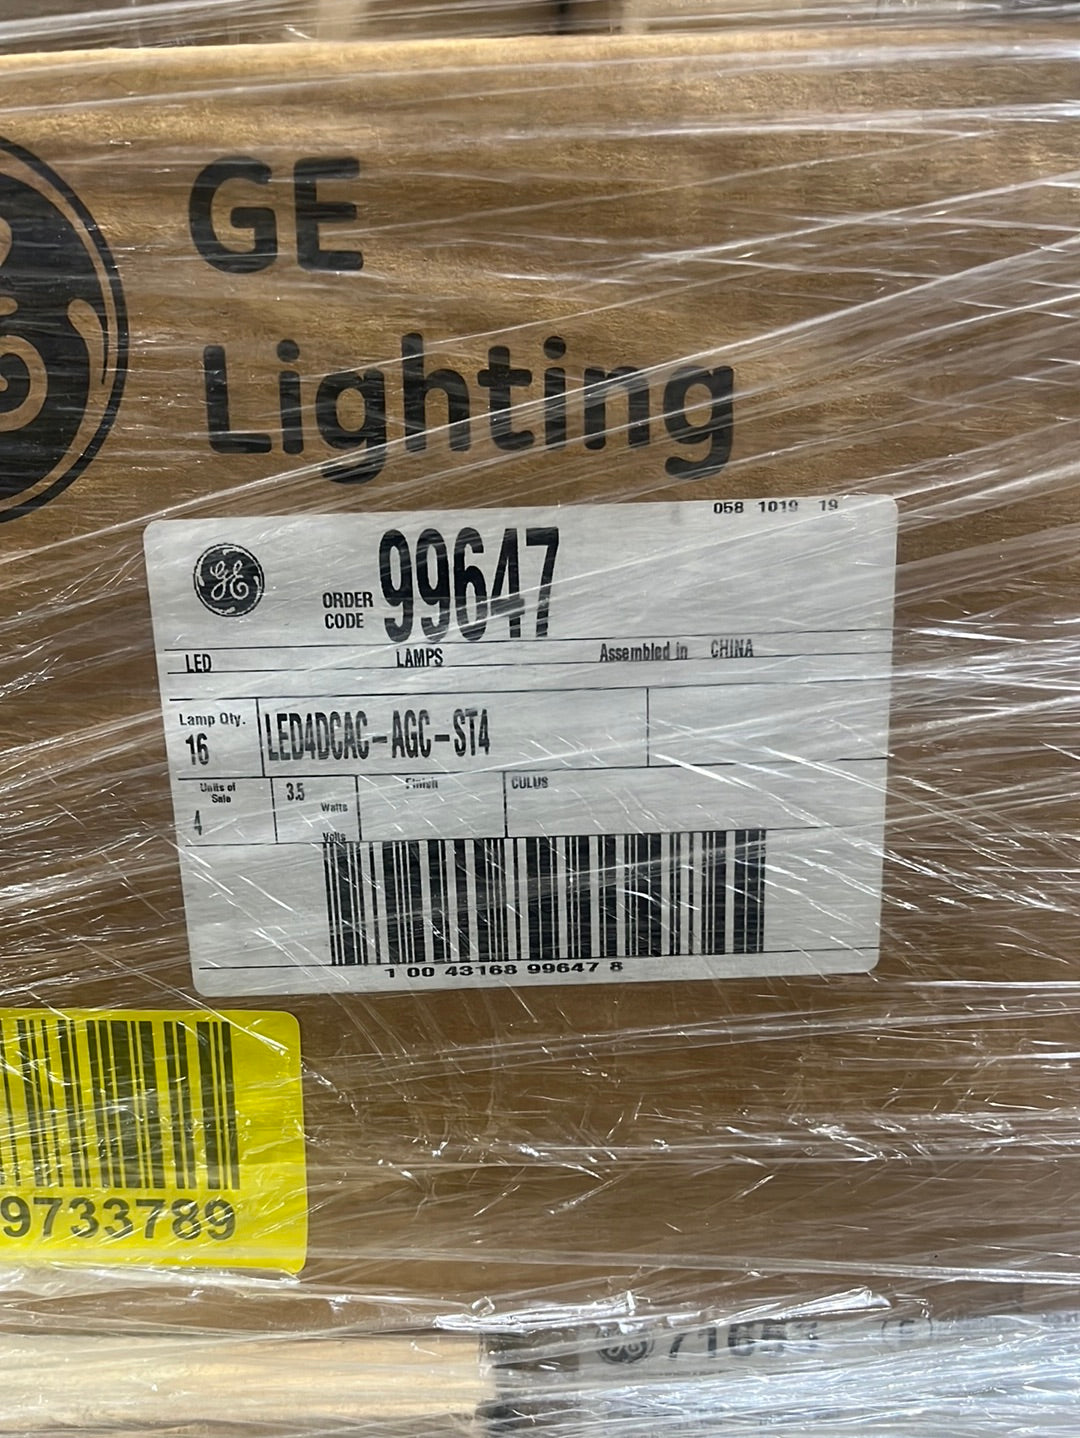 GE Lighting Pallet 41083737